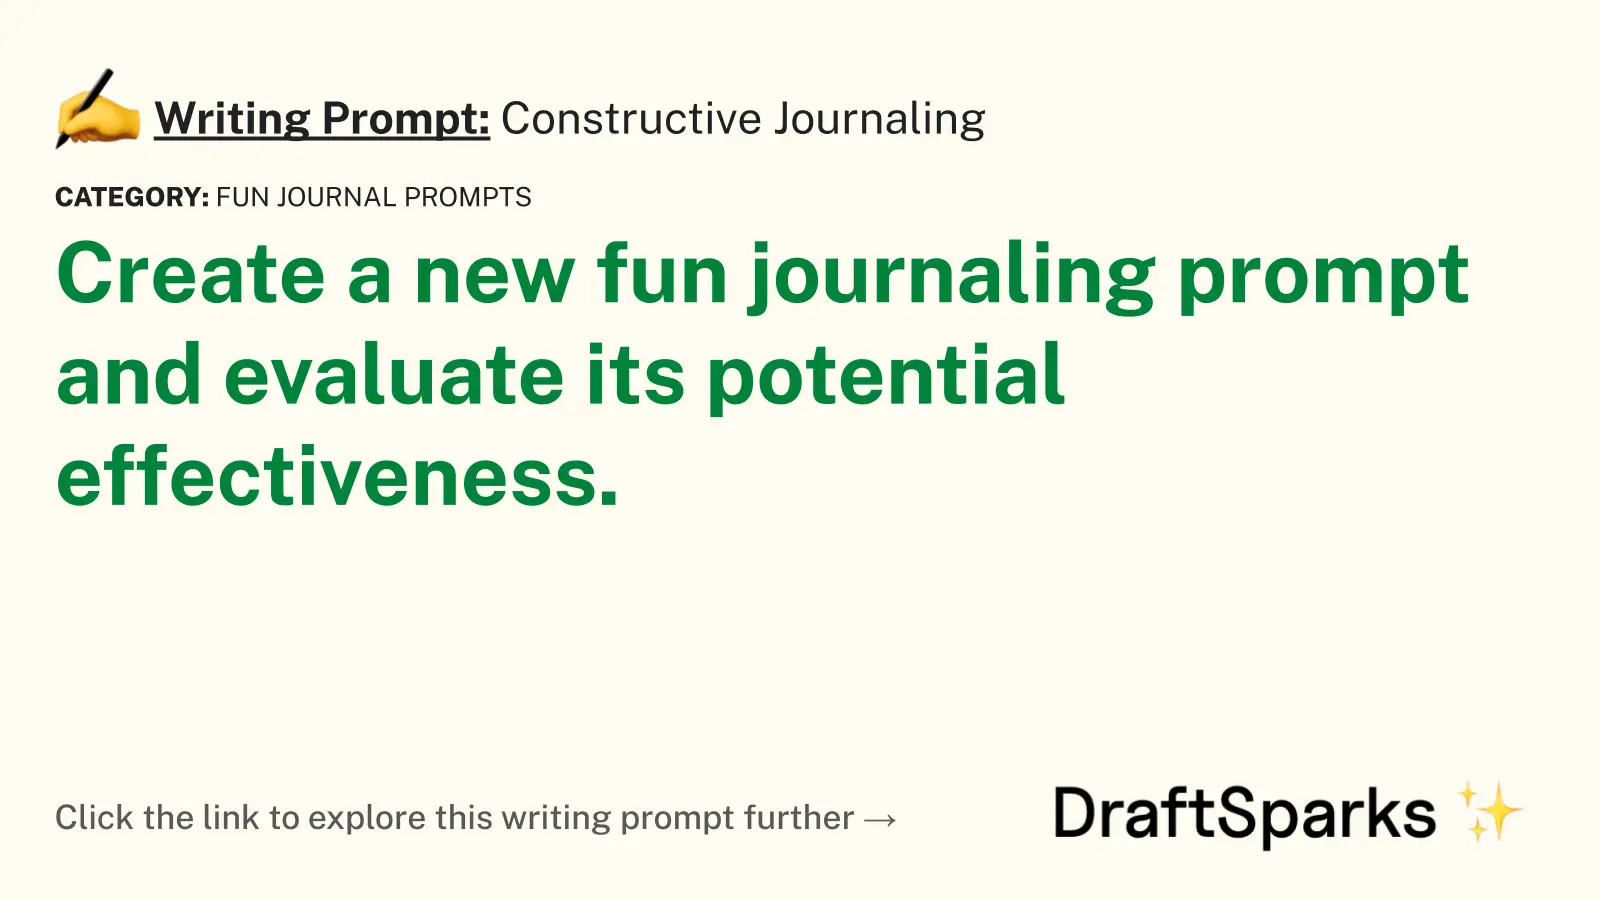 Constructive Journaling